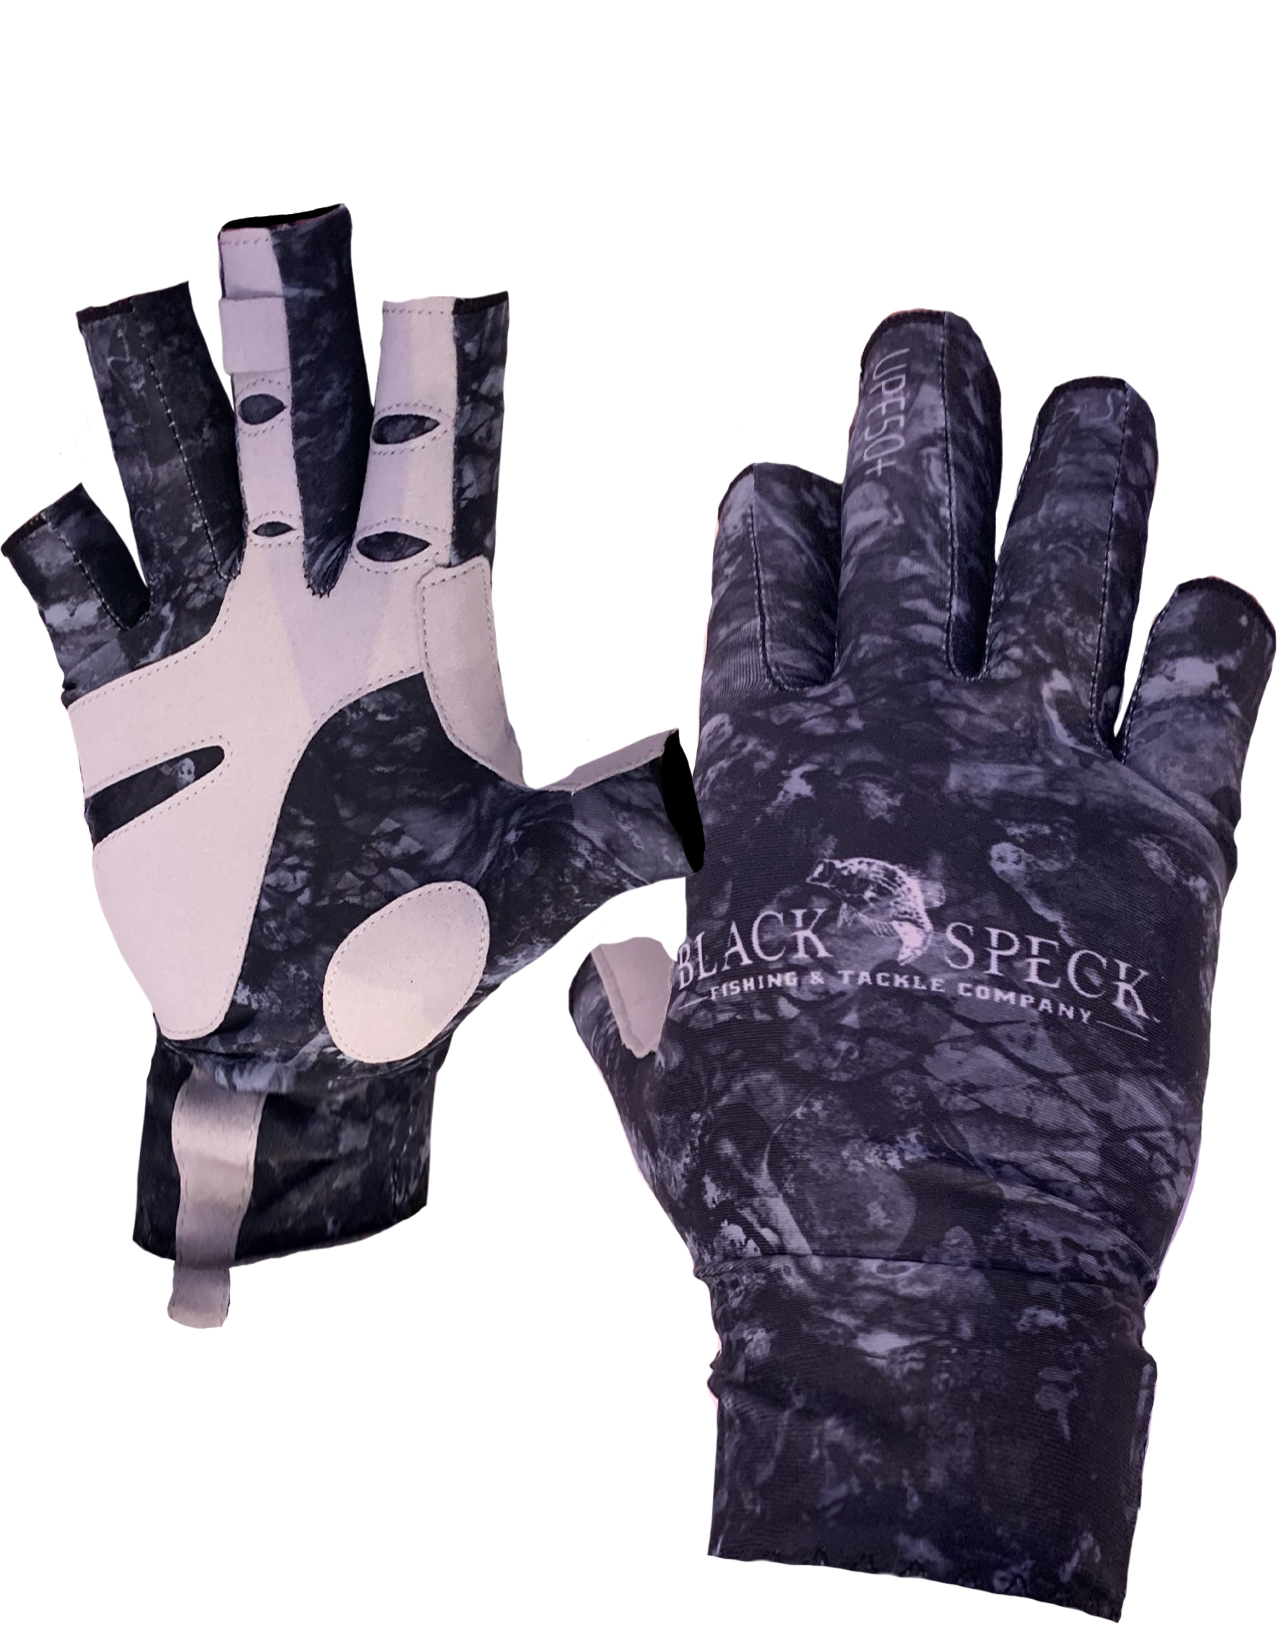 KastKing Fishing Gloves SPF 50 Sun Men Hands Protection Gloves Breathable  Outdoor Sportswear Gloves Carp Fishing Apparel Pesca